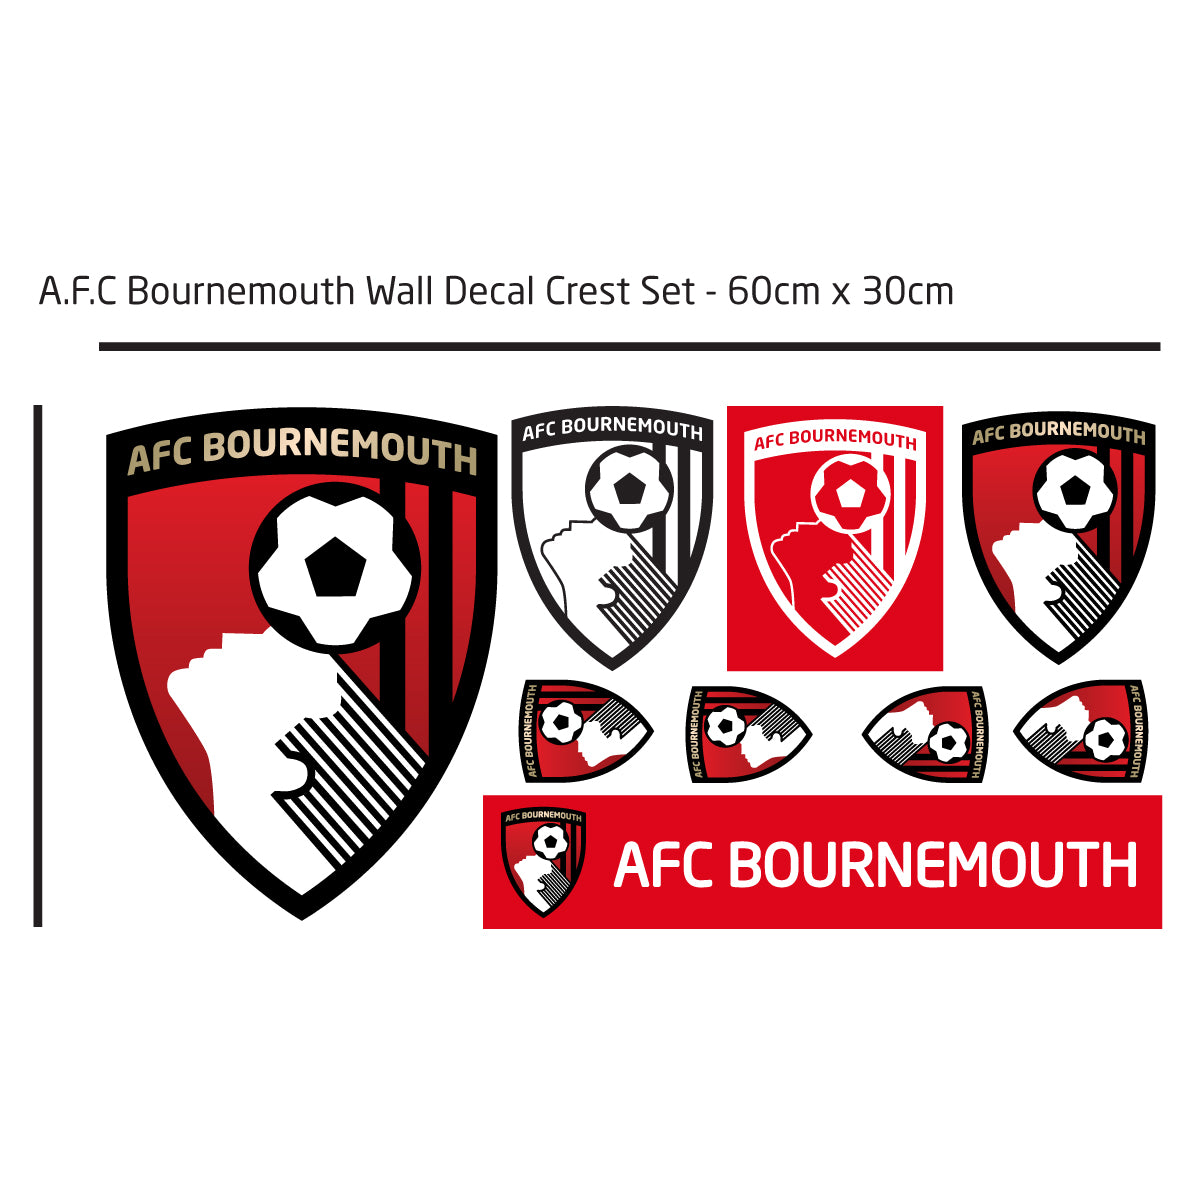 AFC Bournemouth - Club Badge Wall Mural + Cherries Wall Sticker Set